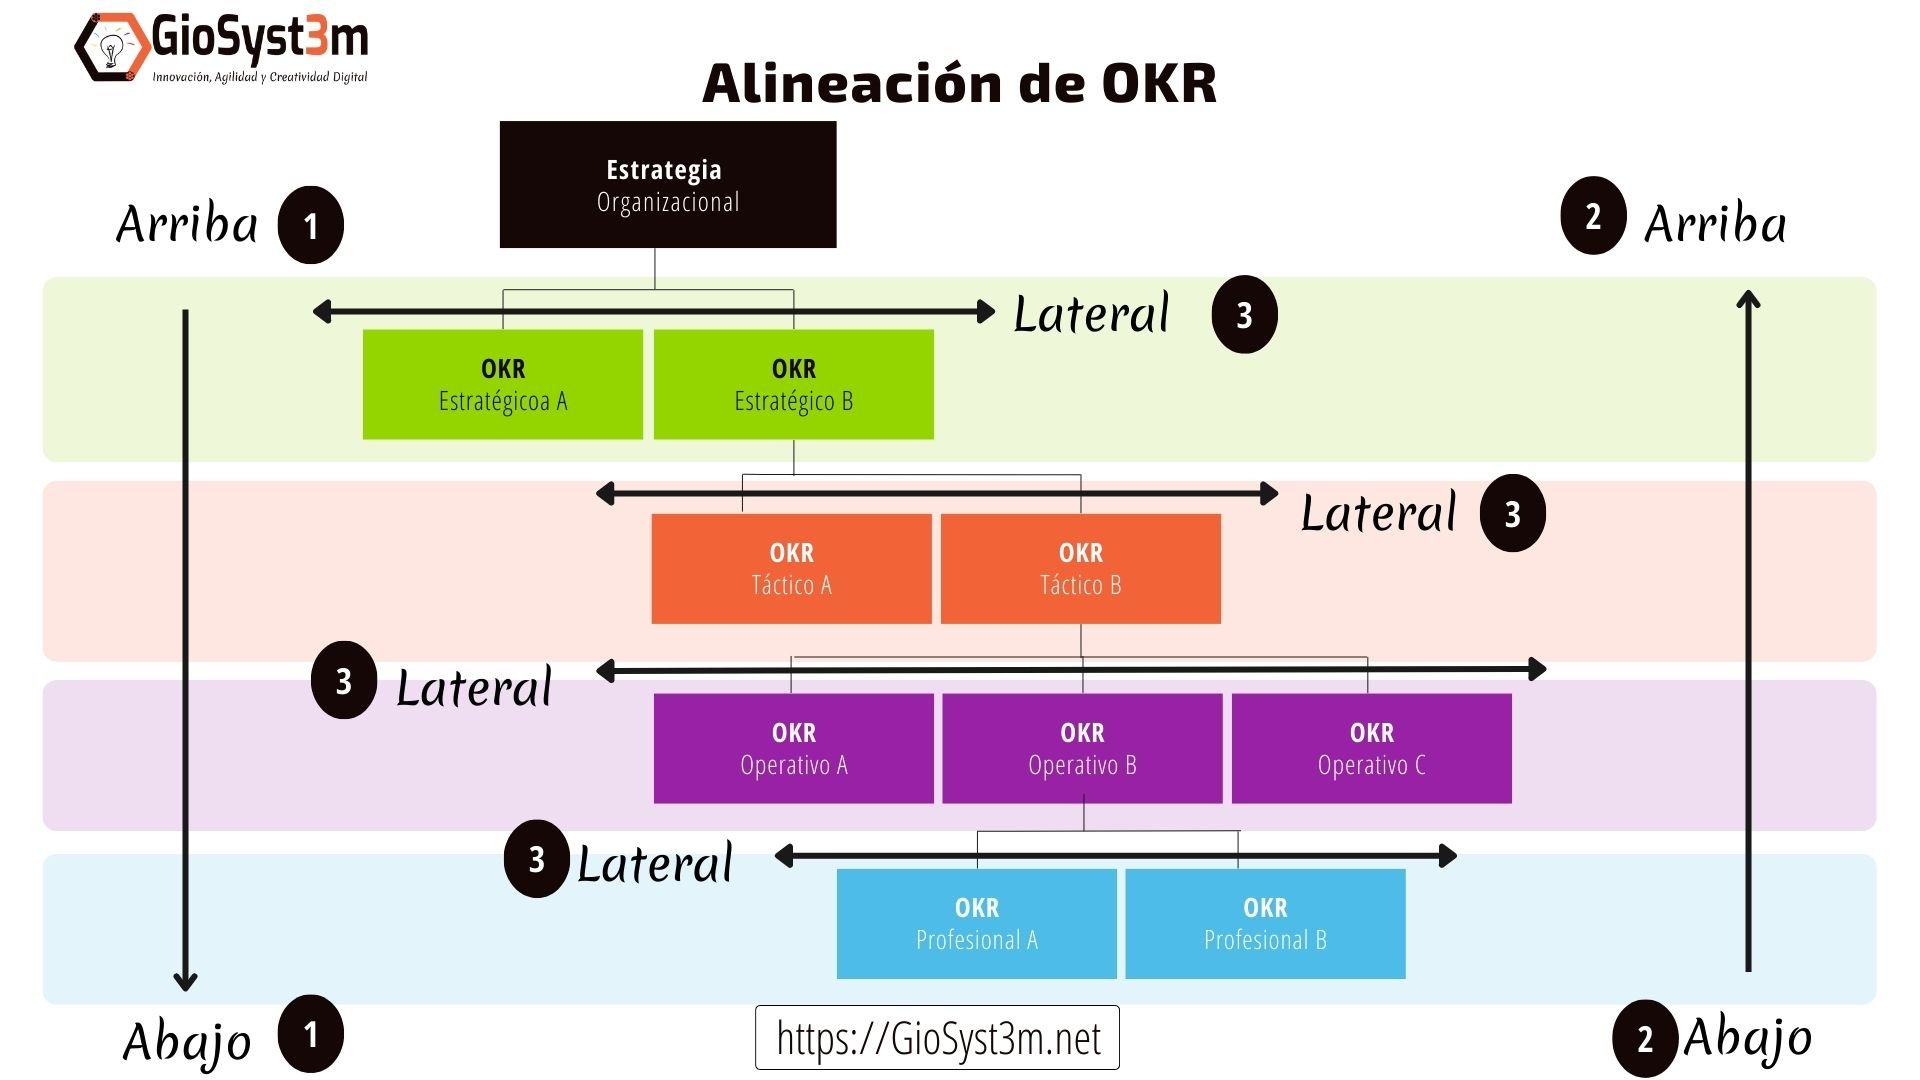 OKR Alineaciones - GioSyst3m